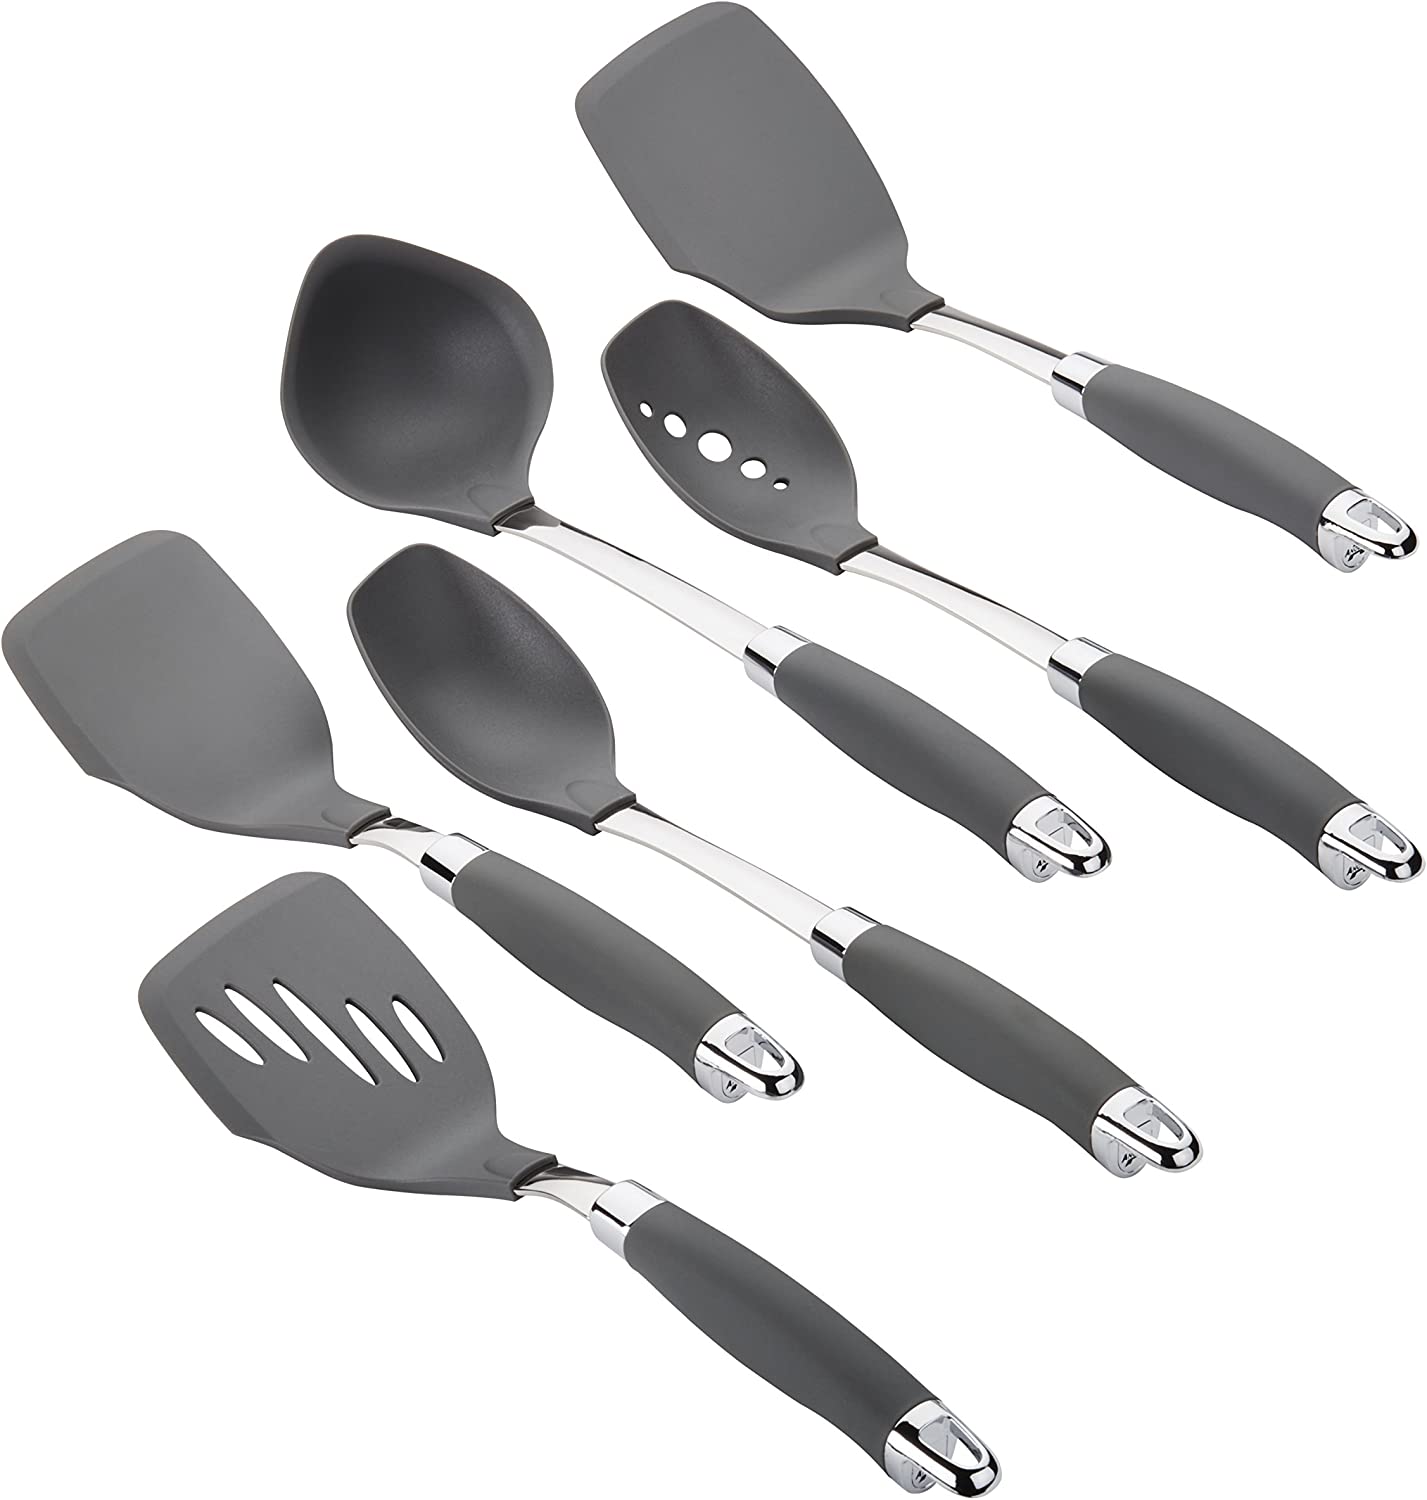 Anolon SureGrip Nonstick Utensil Kitchen Cooking Tools Set, 6 Piece, Gray